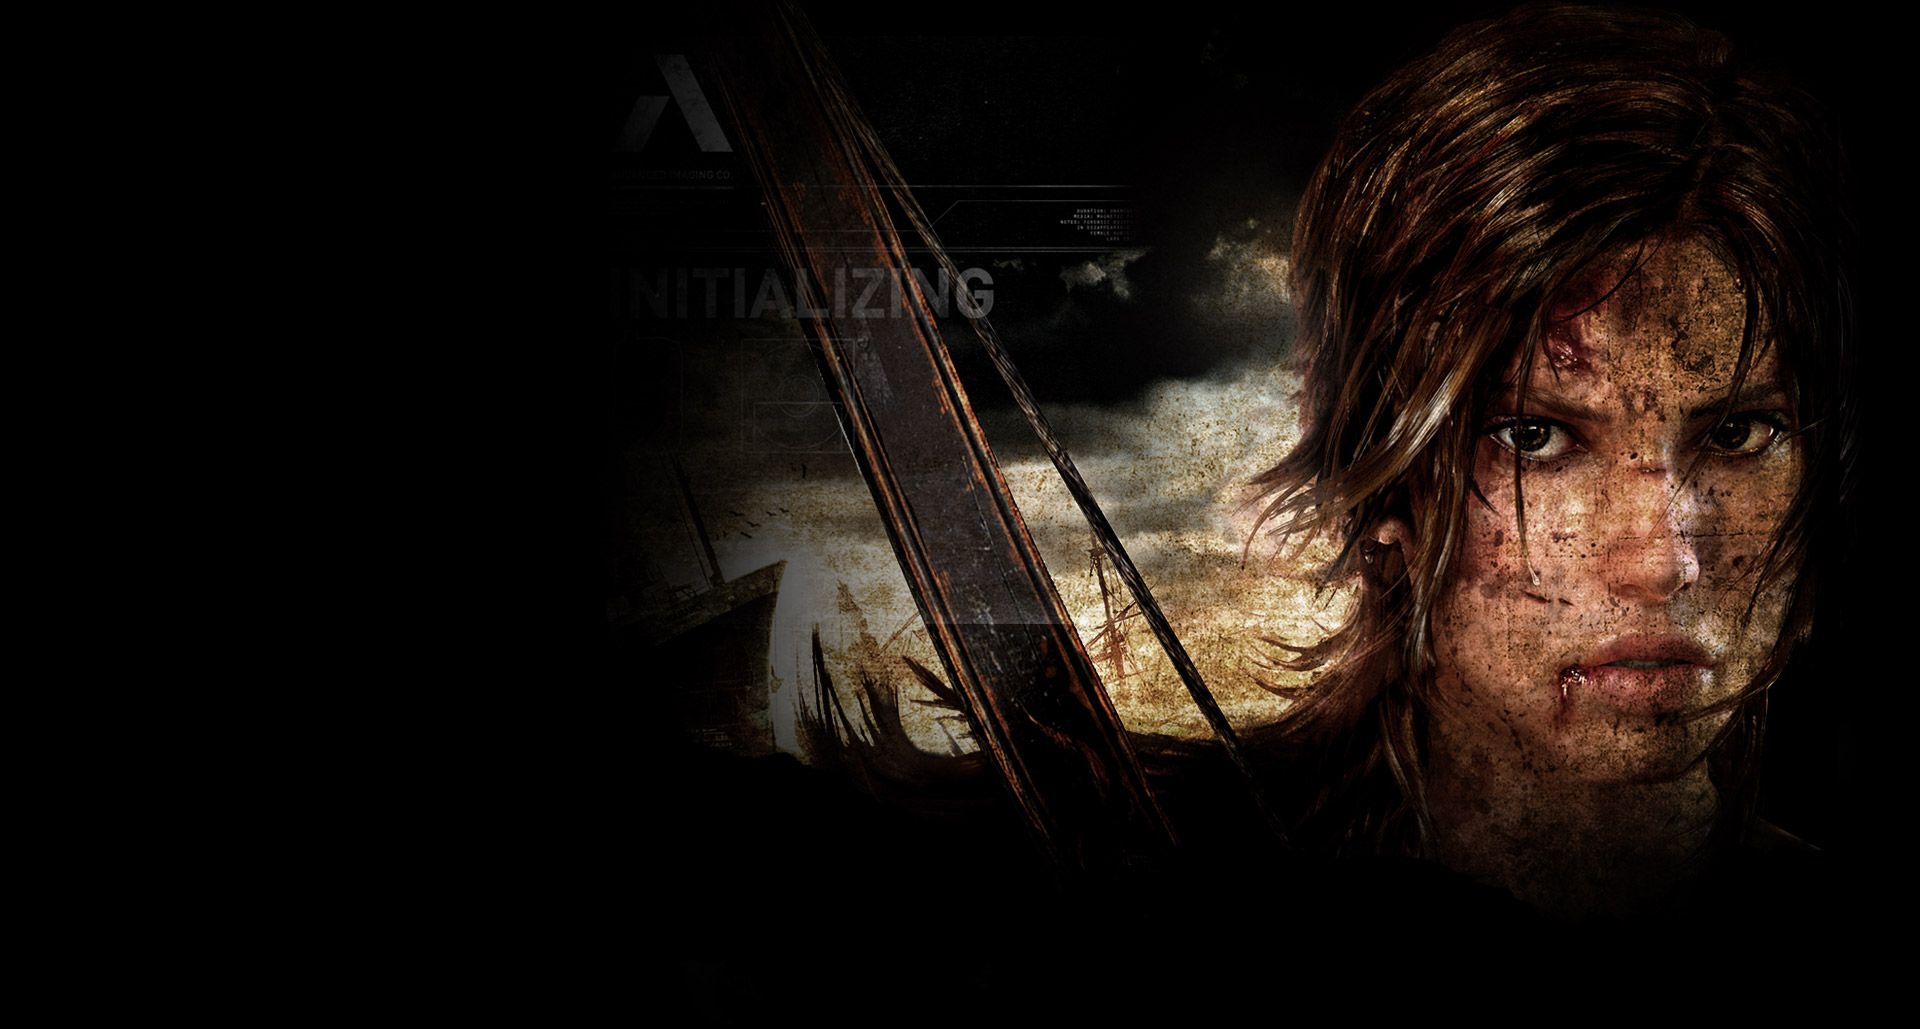 Tomb Raider Steam Profile Backgrounds - Album on Imgur